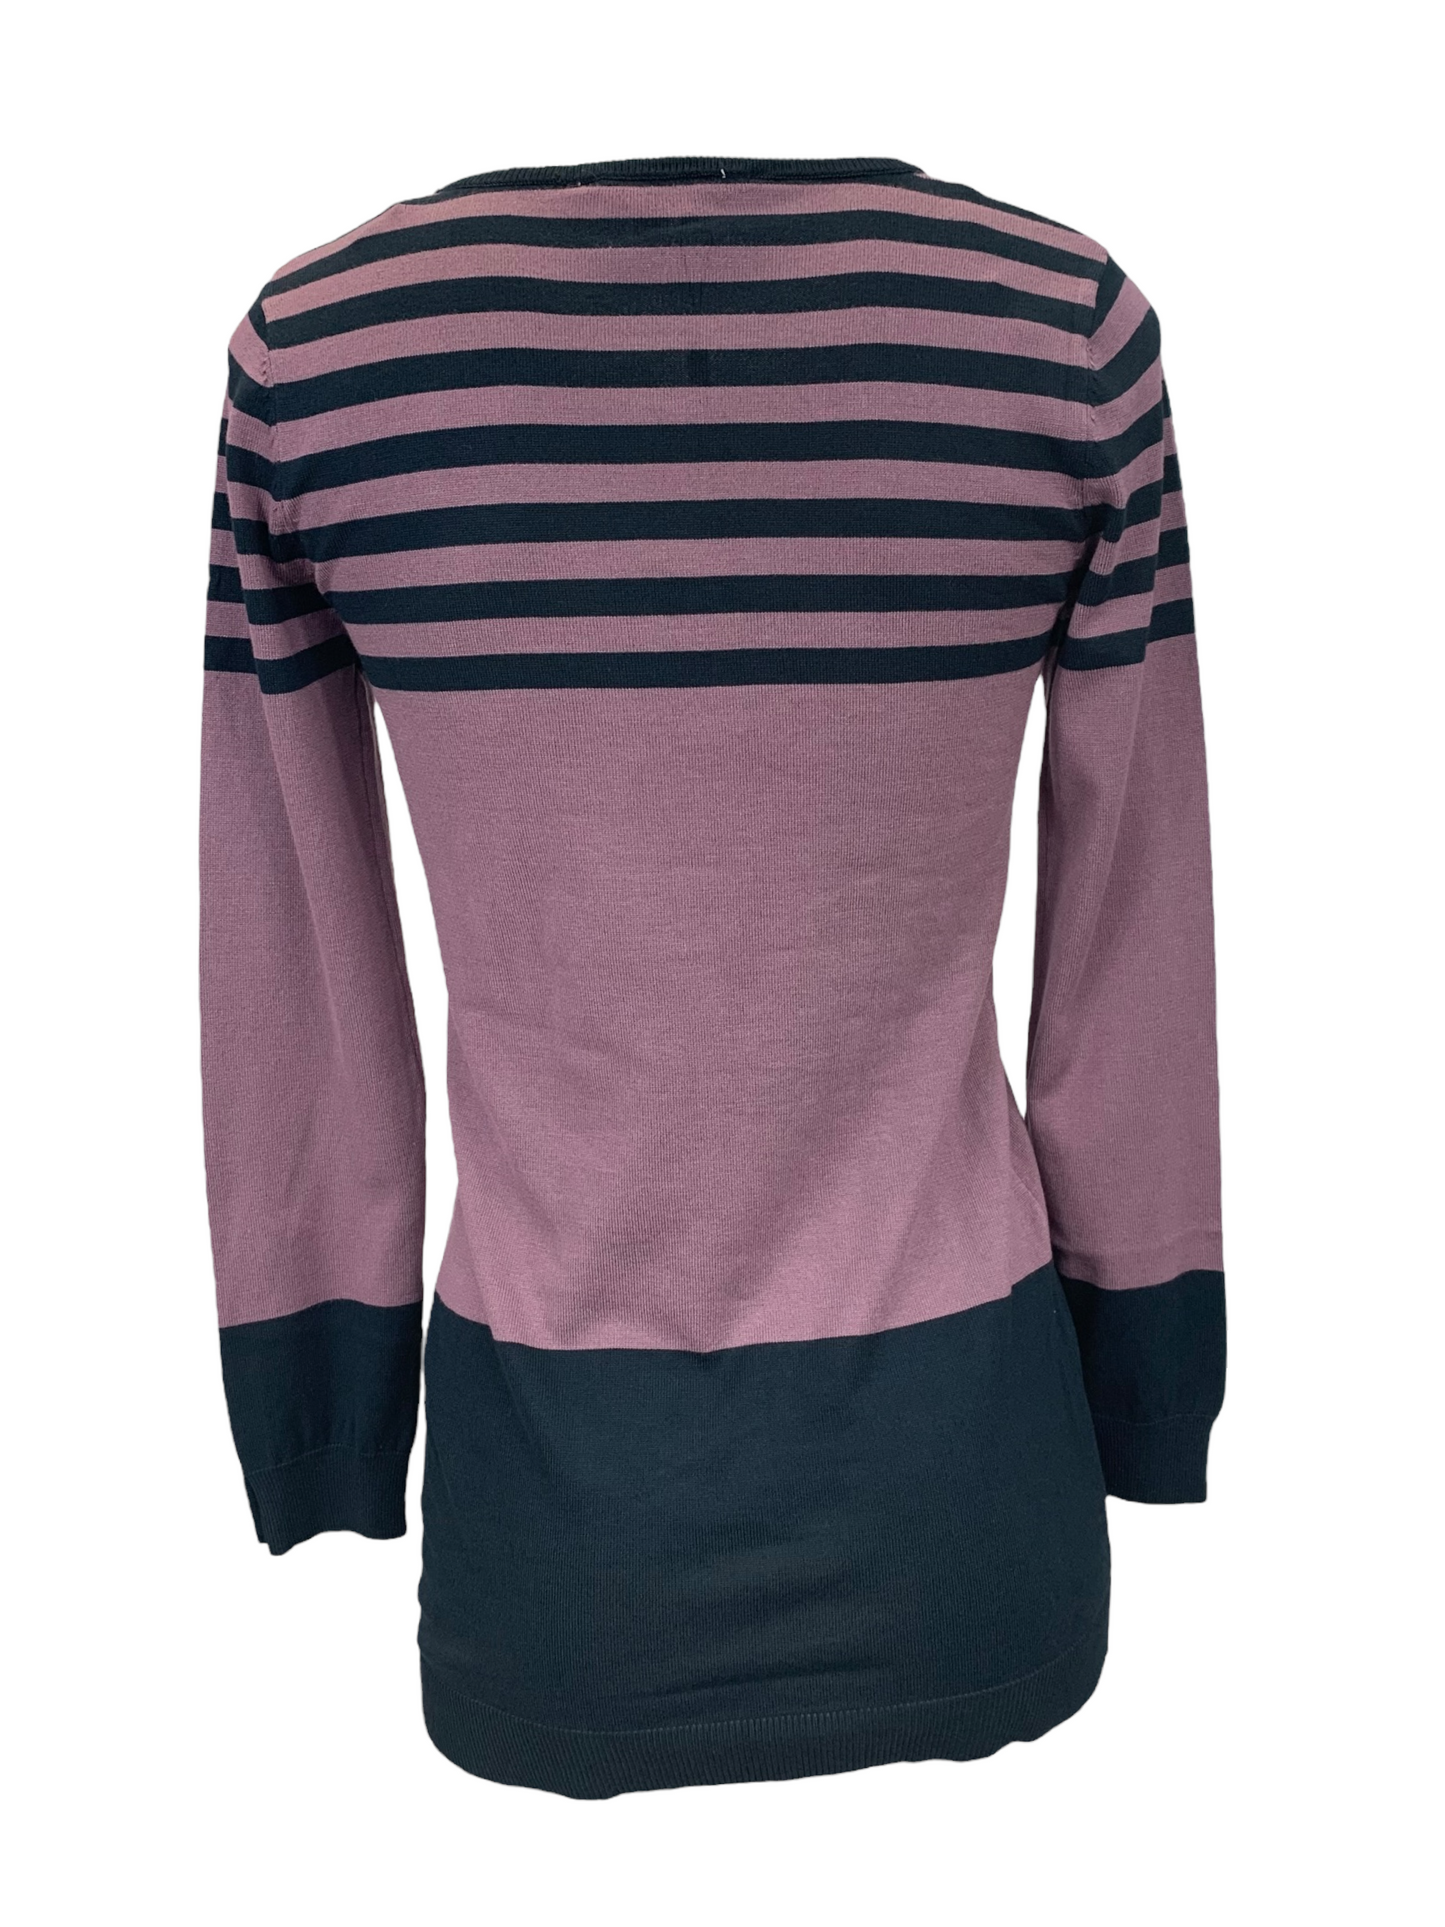 Women's Mandarine&Co purple sweater